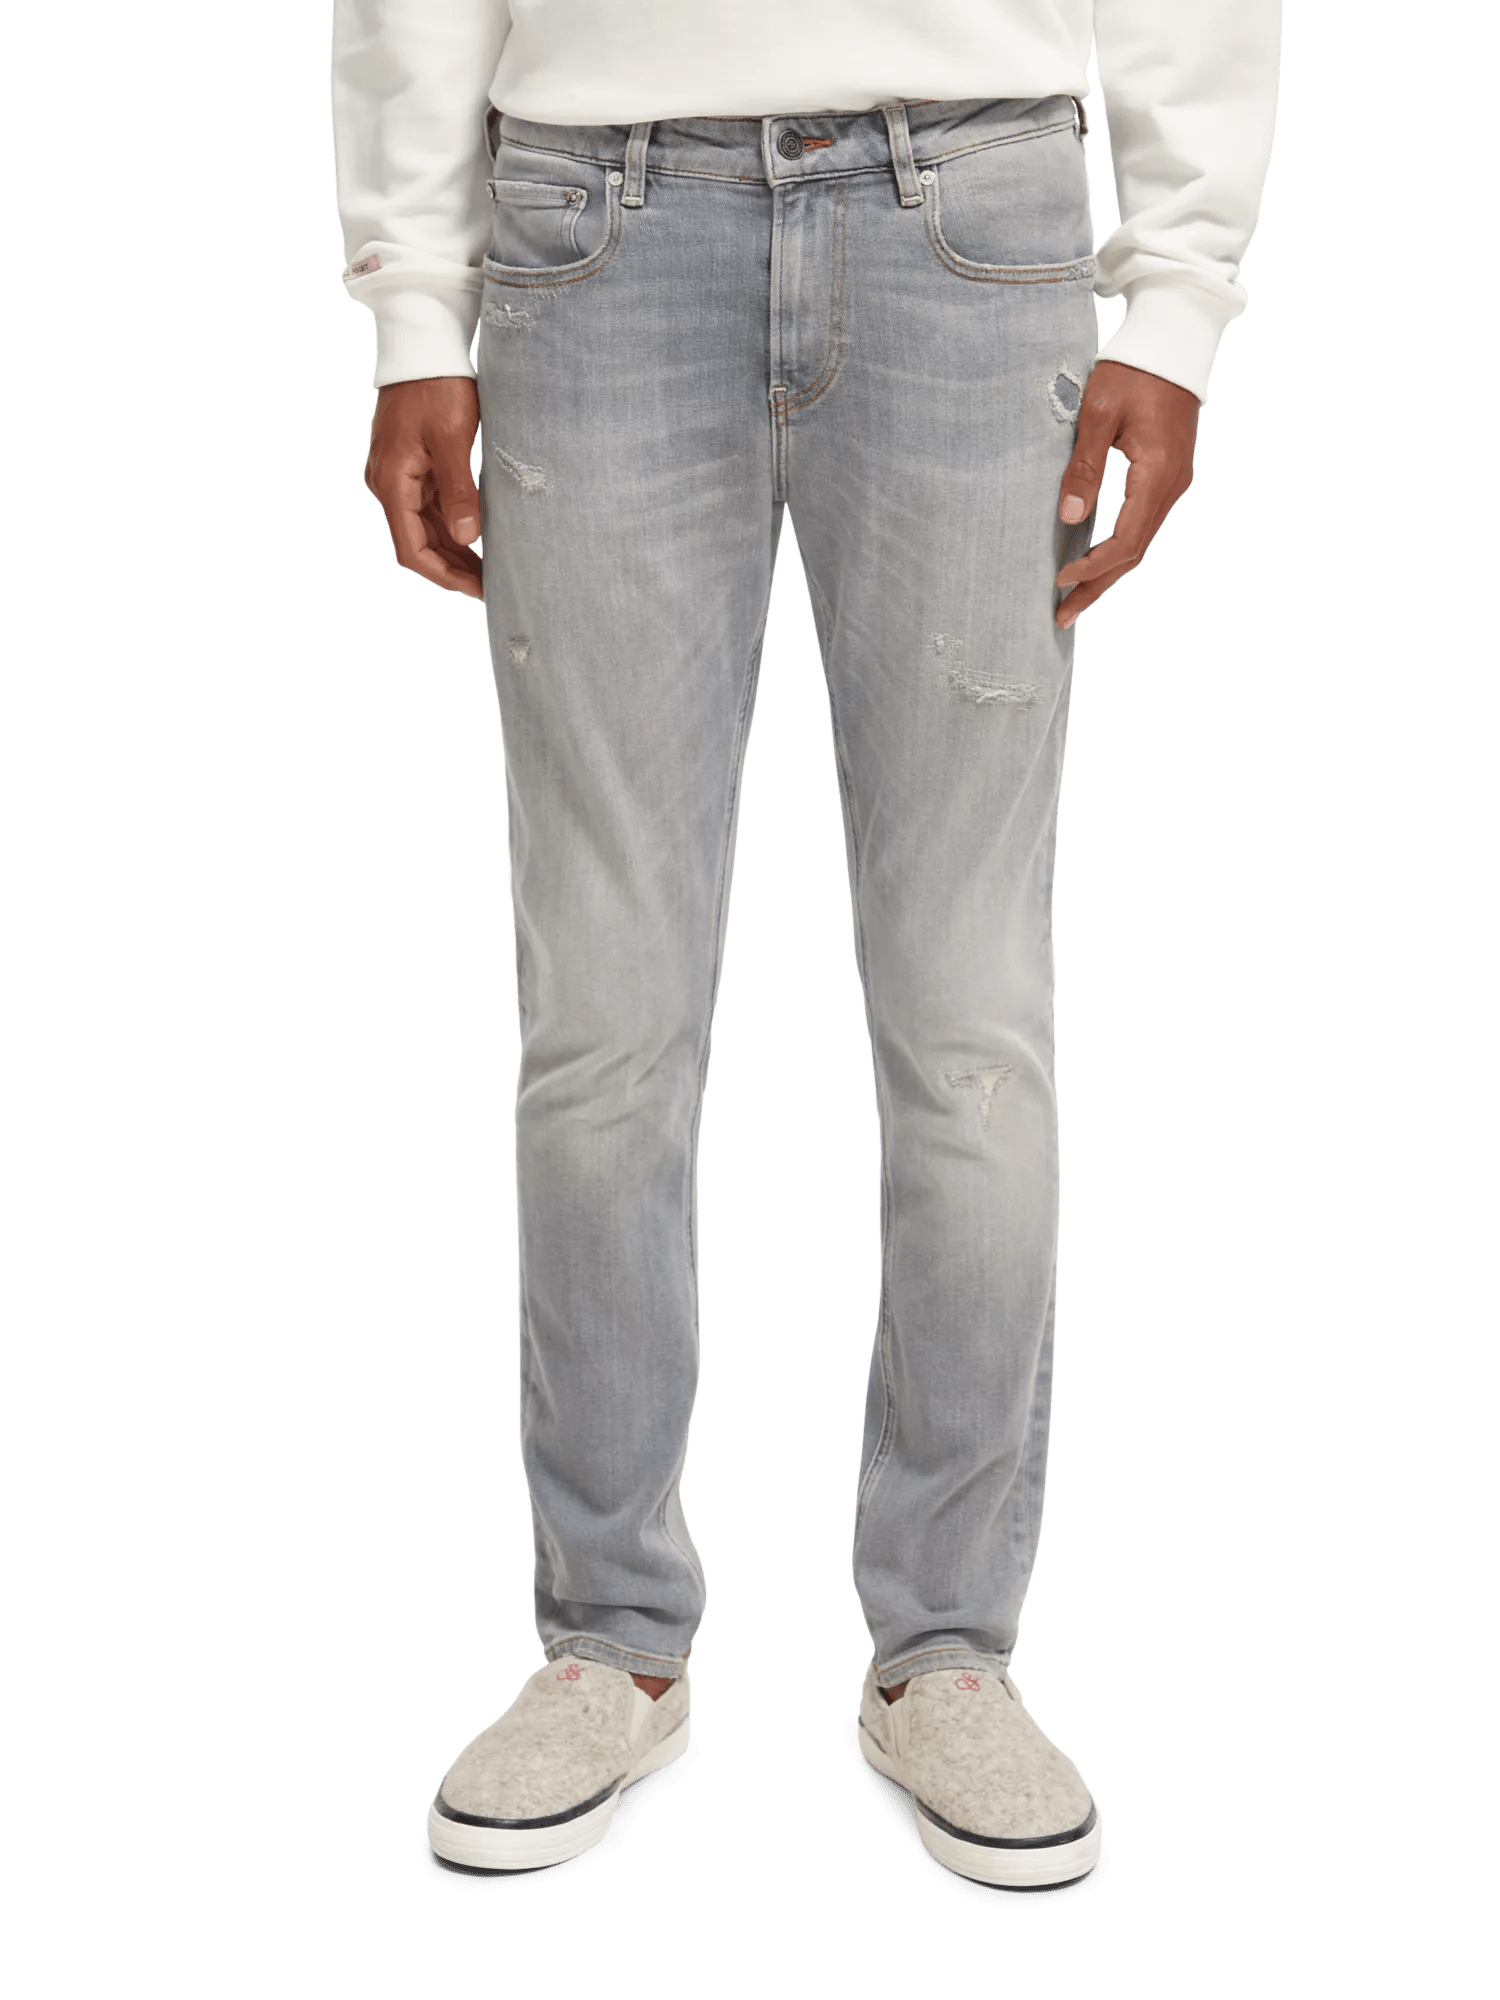 The Skim super-slim fit jeans